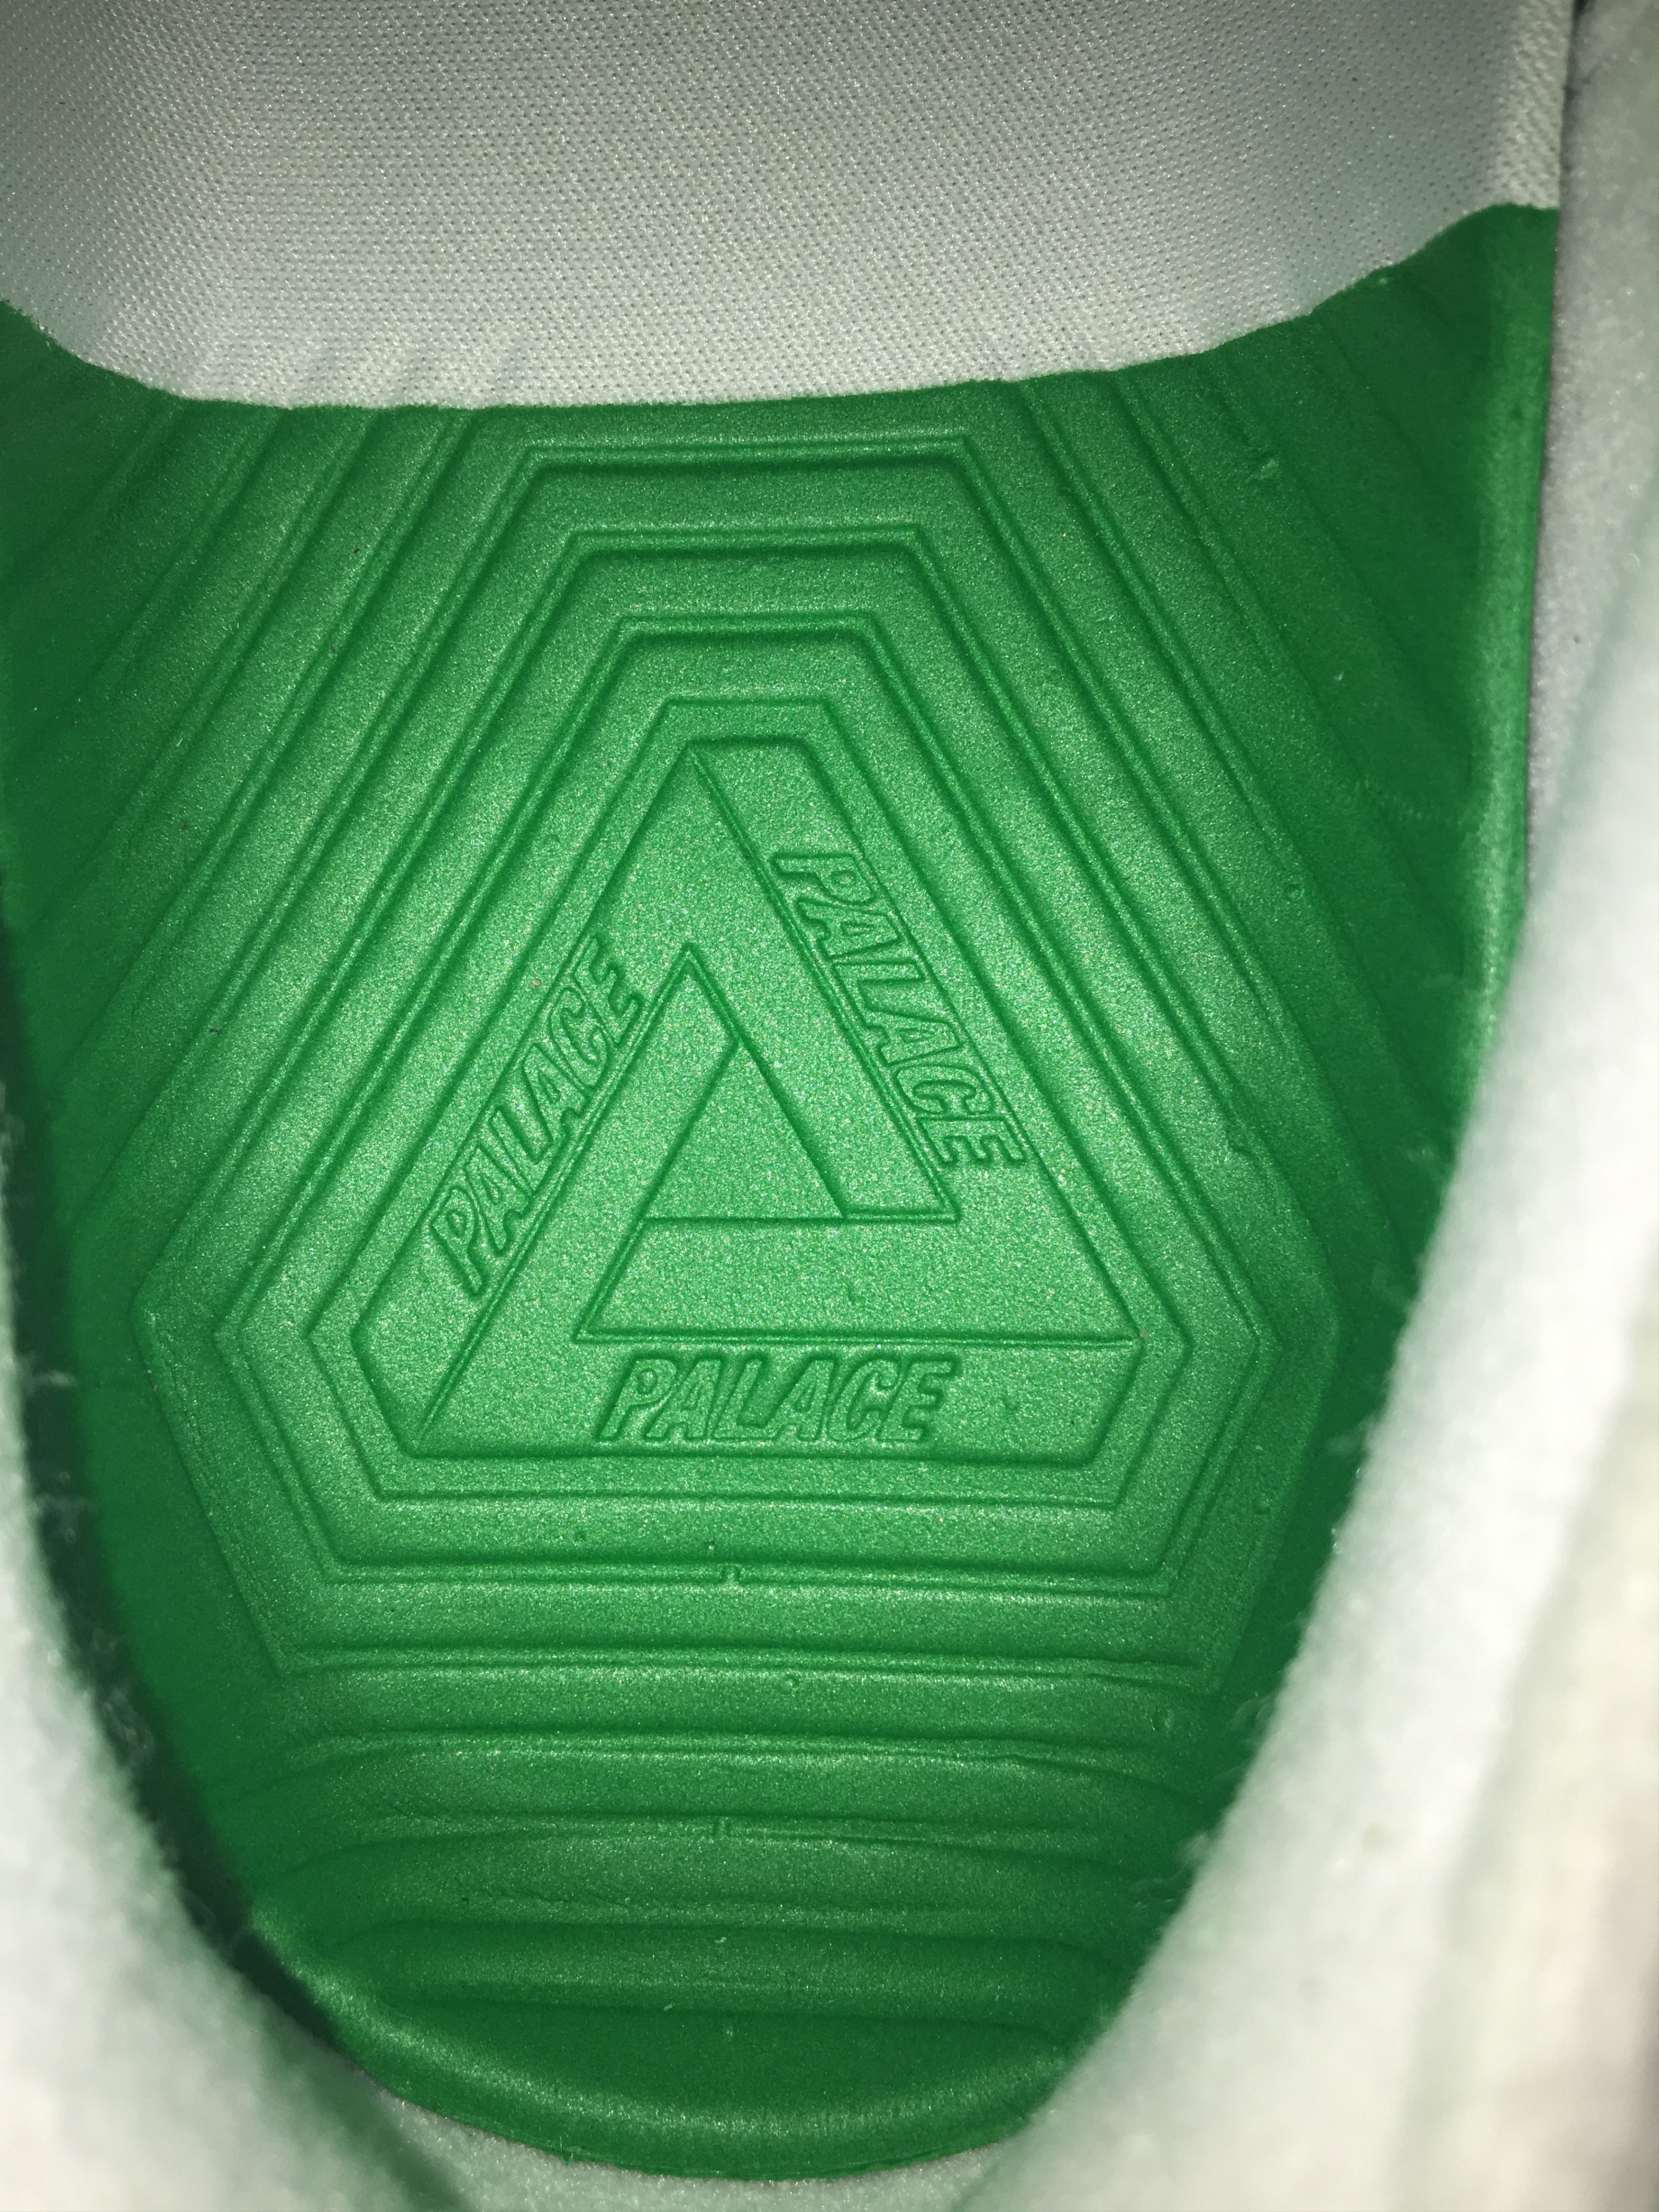 Adidas Palace Oreardon Green\White Size US 11 / EU 44 - 2 Preview